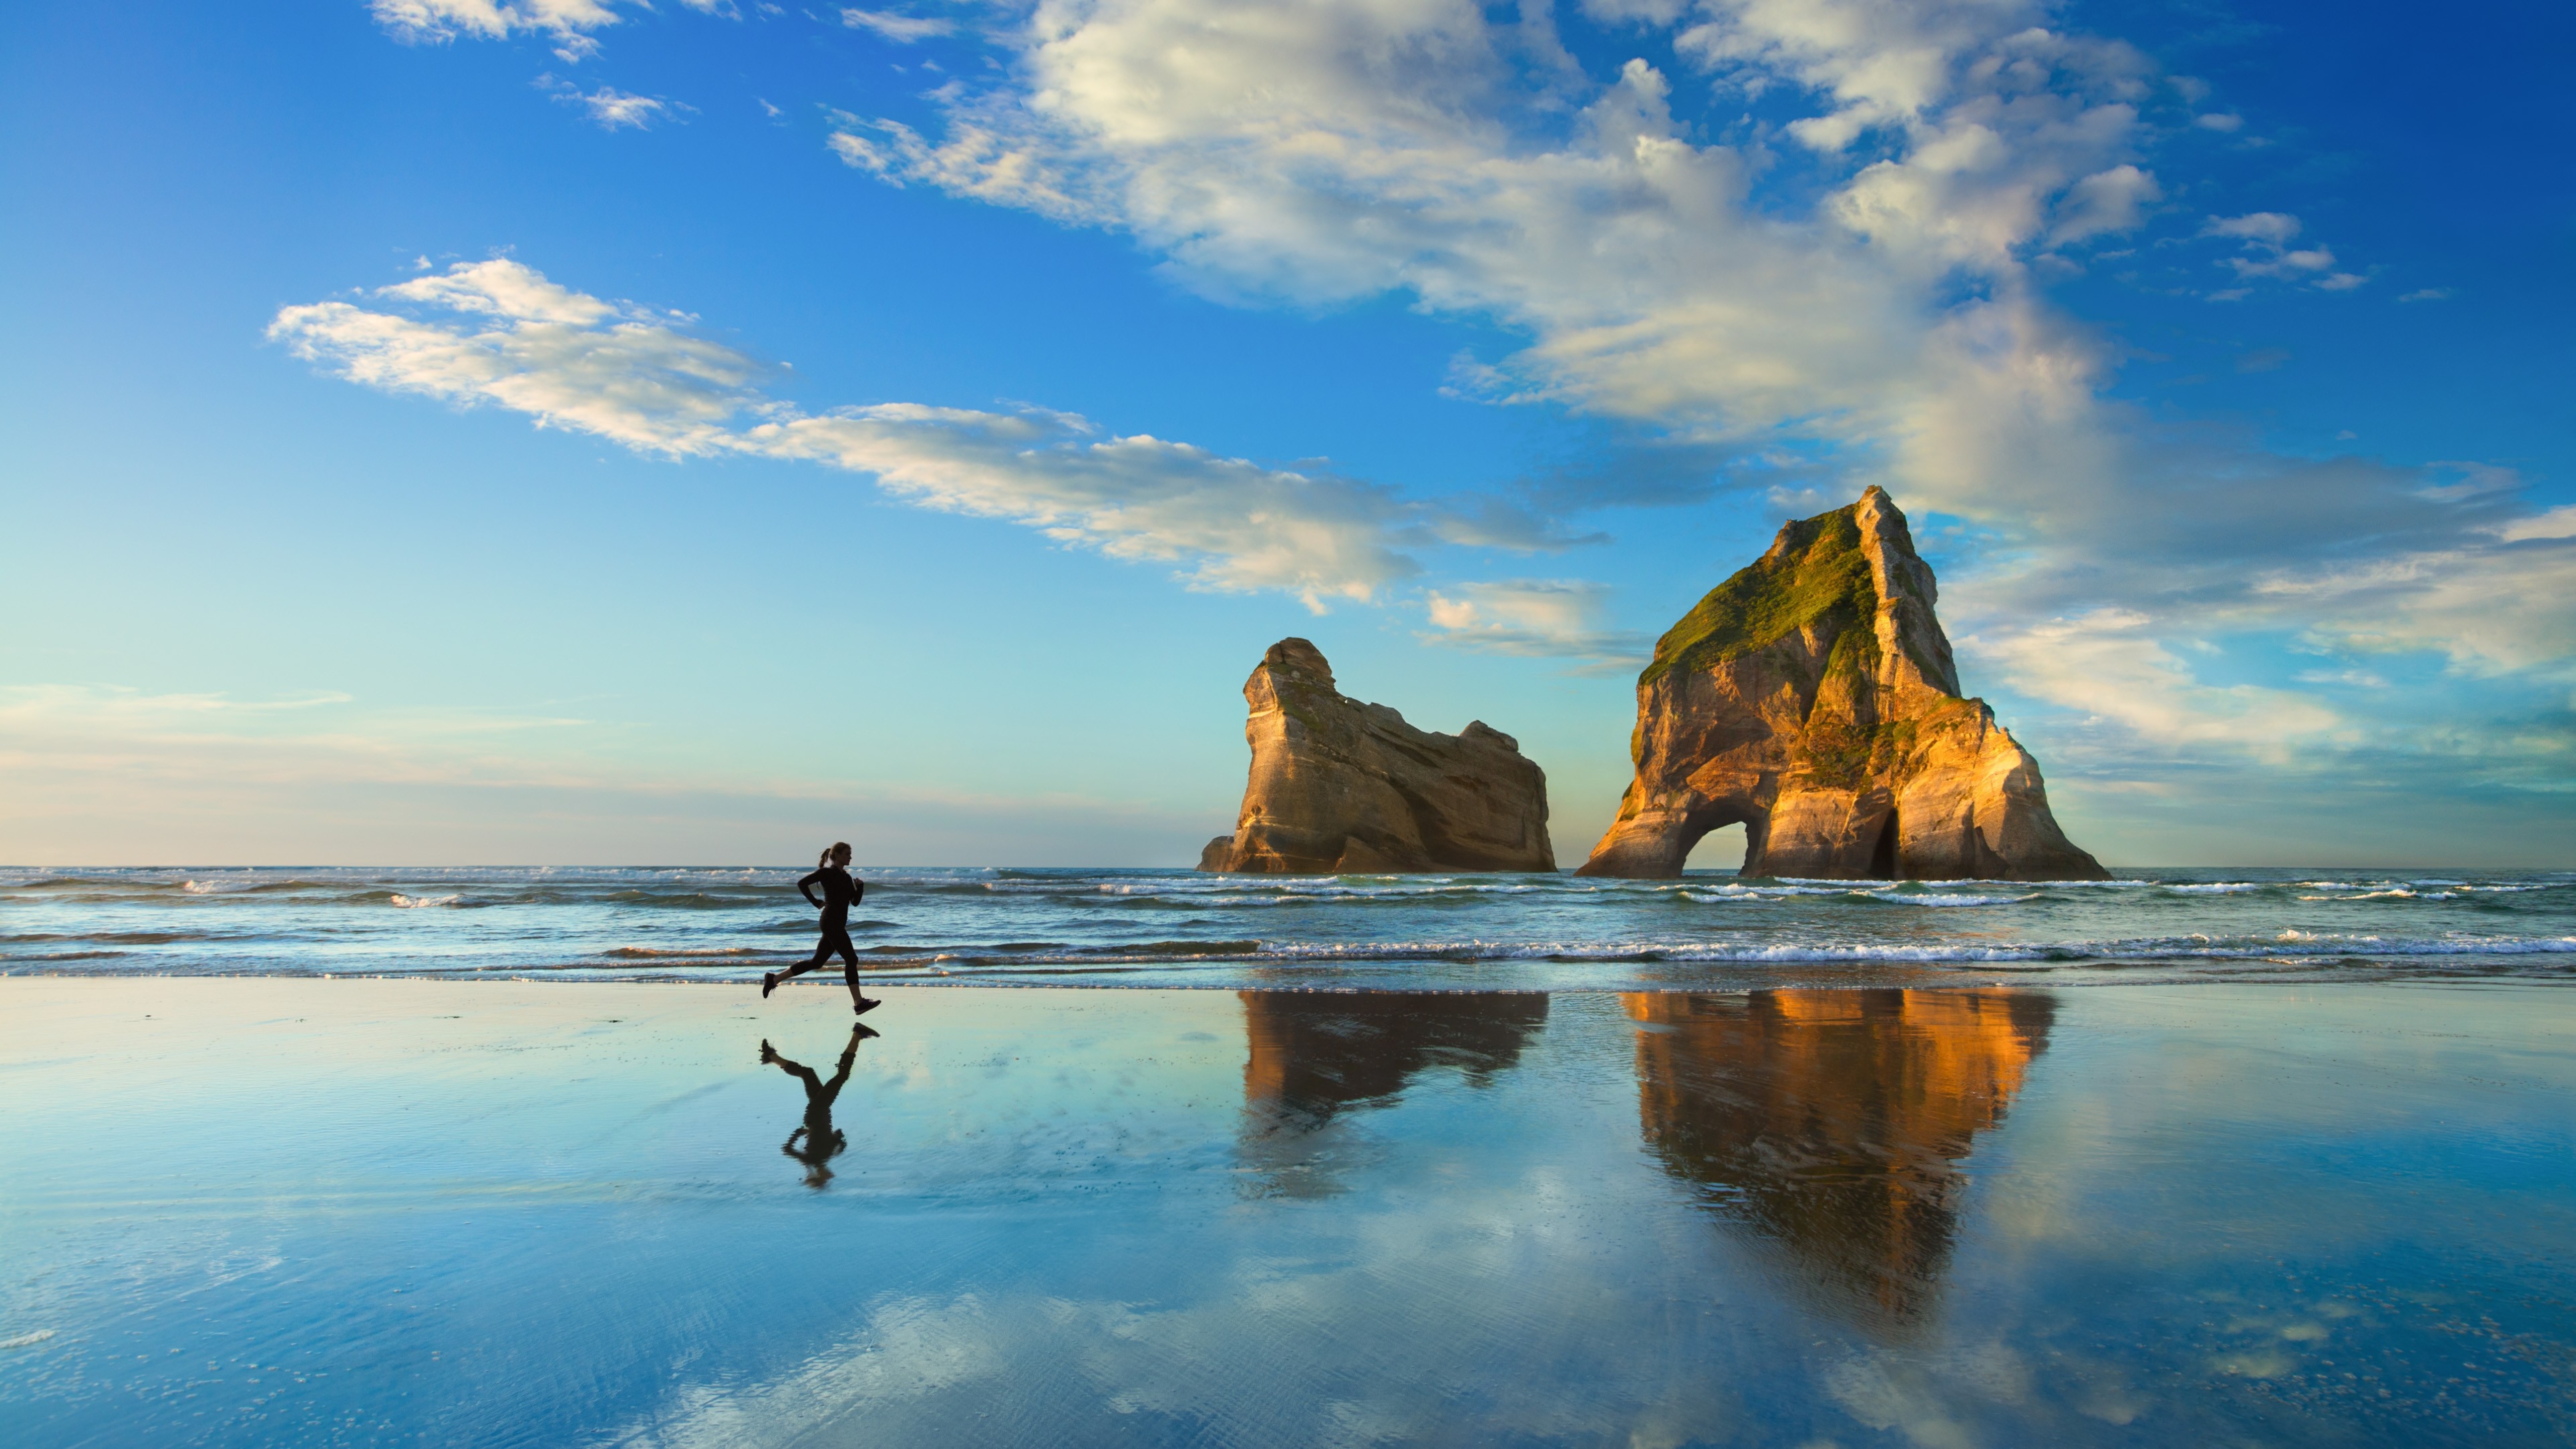 reflection, horizon, photography, running, arch, scenic, ocean, beach, cloud